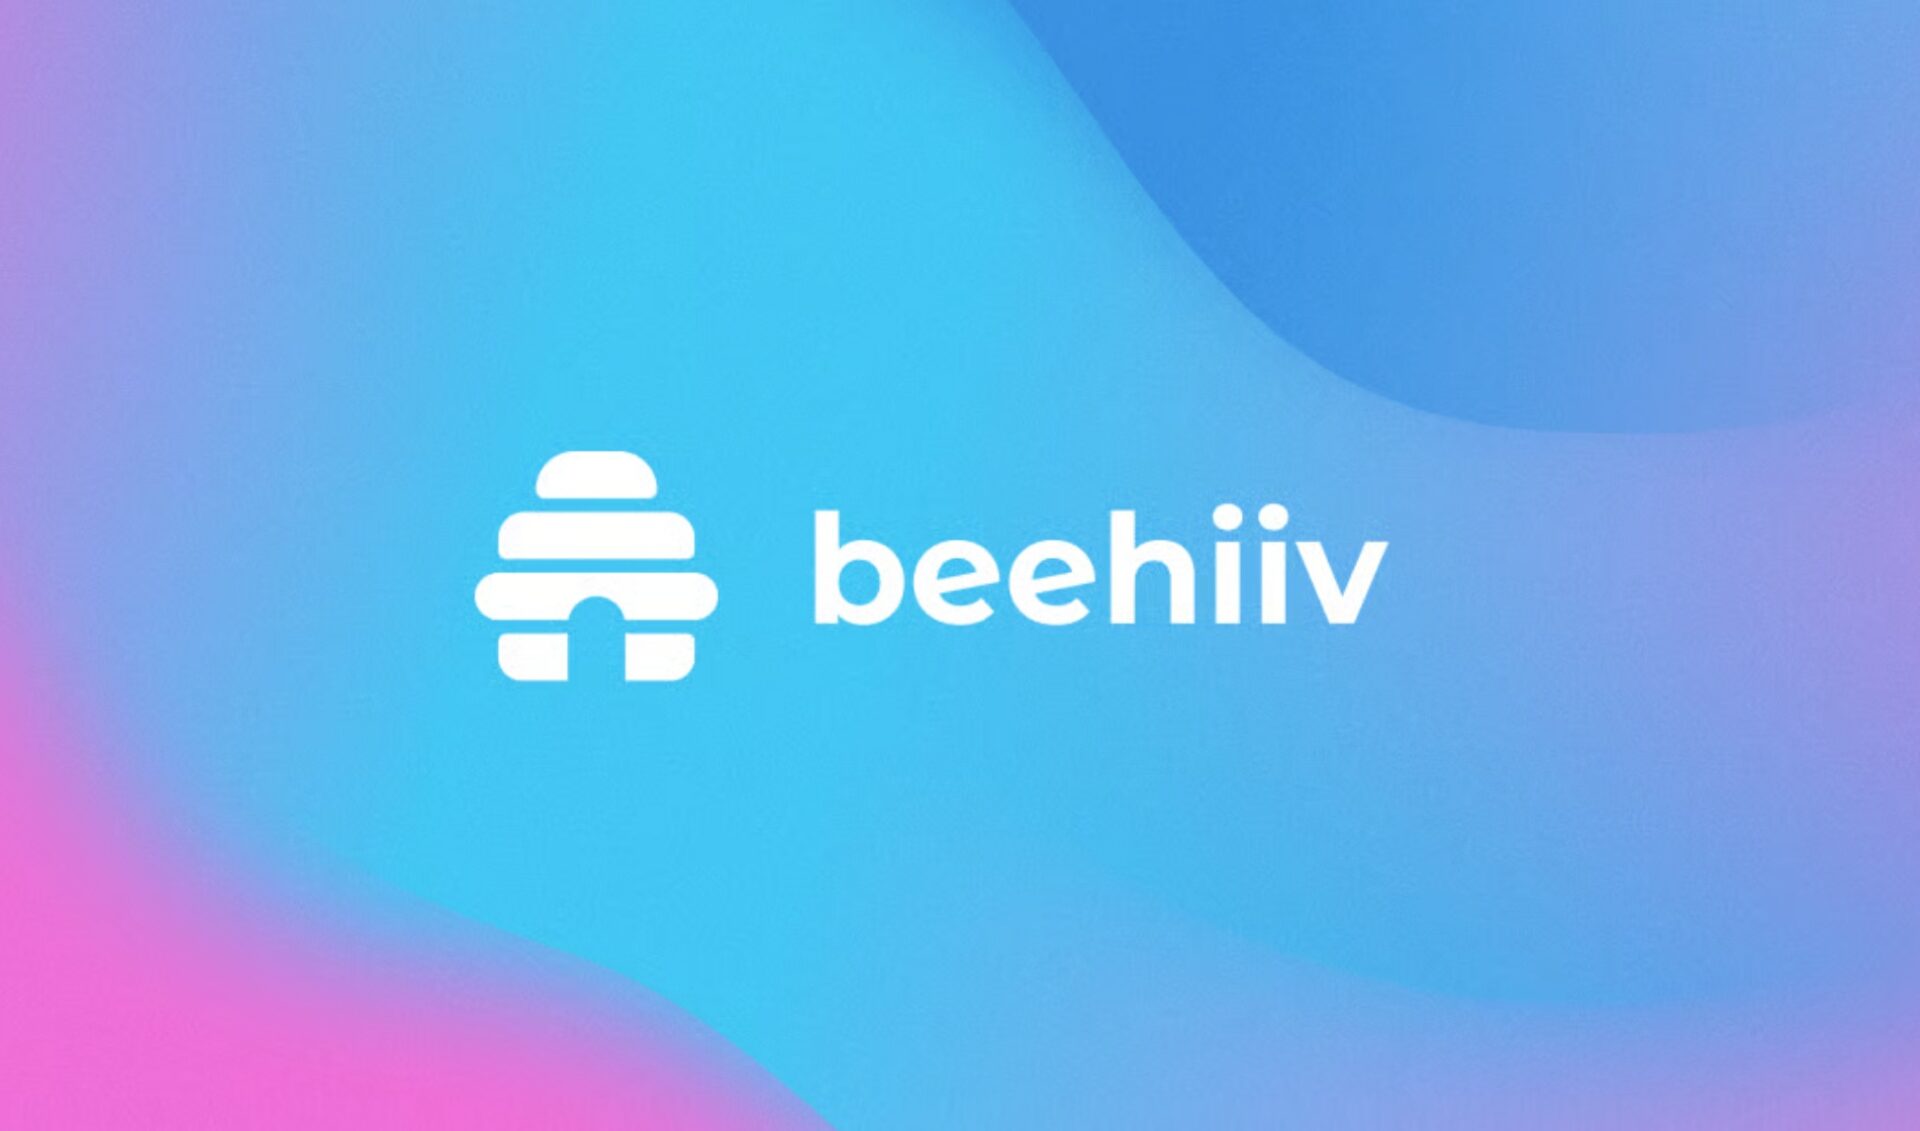 Newsletter platform beehiiv prepares for expansion with $33 million Series B